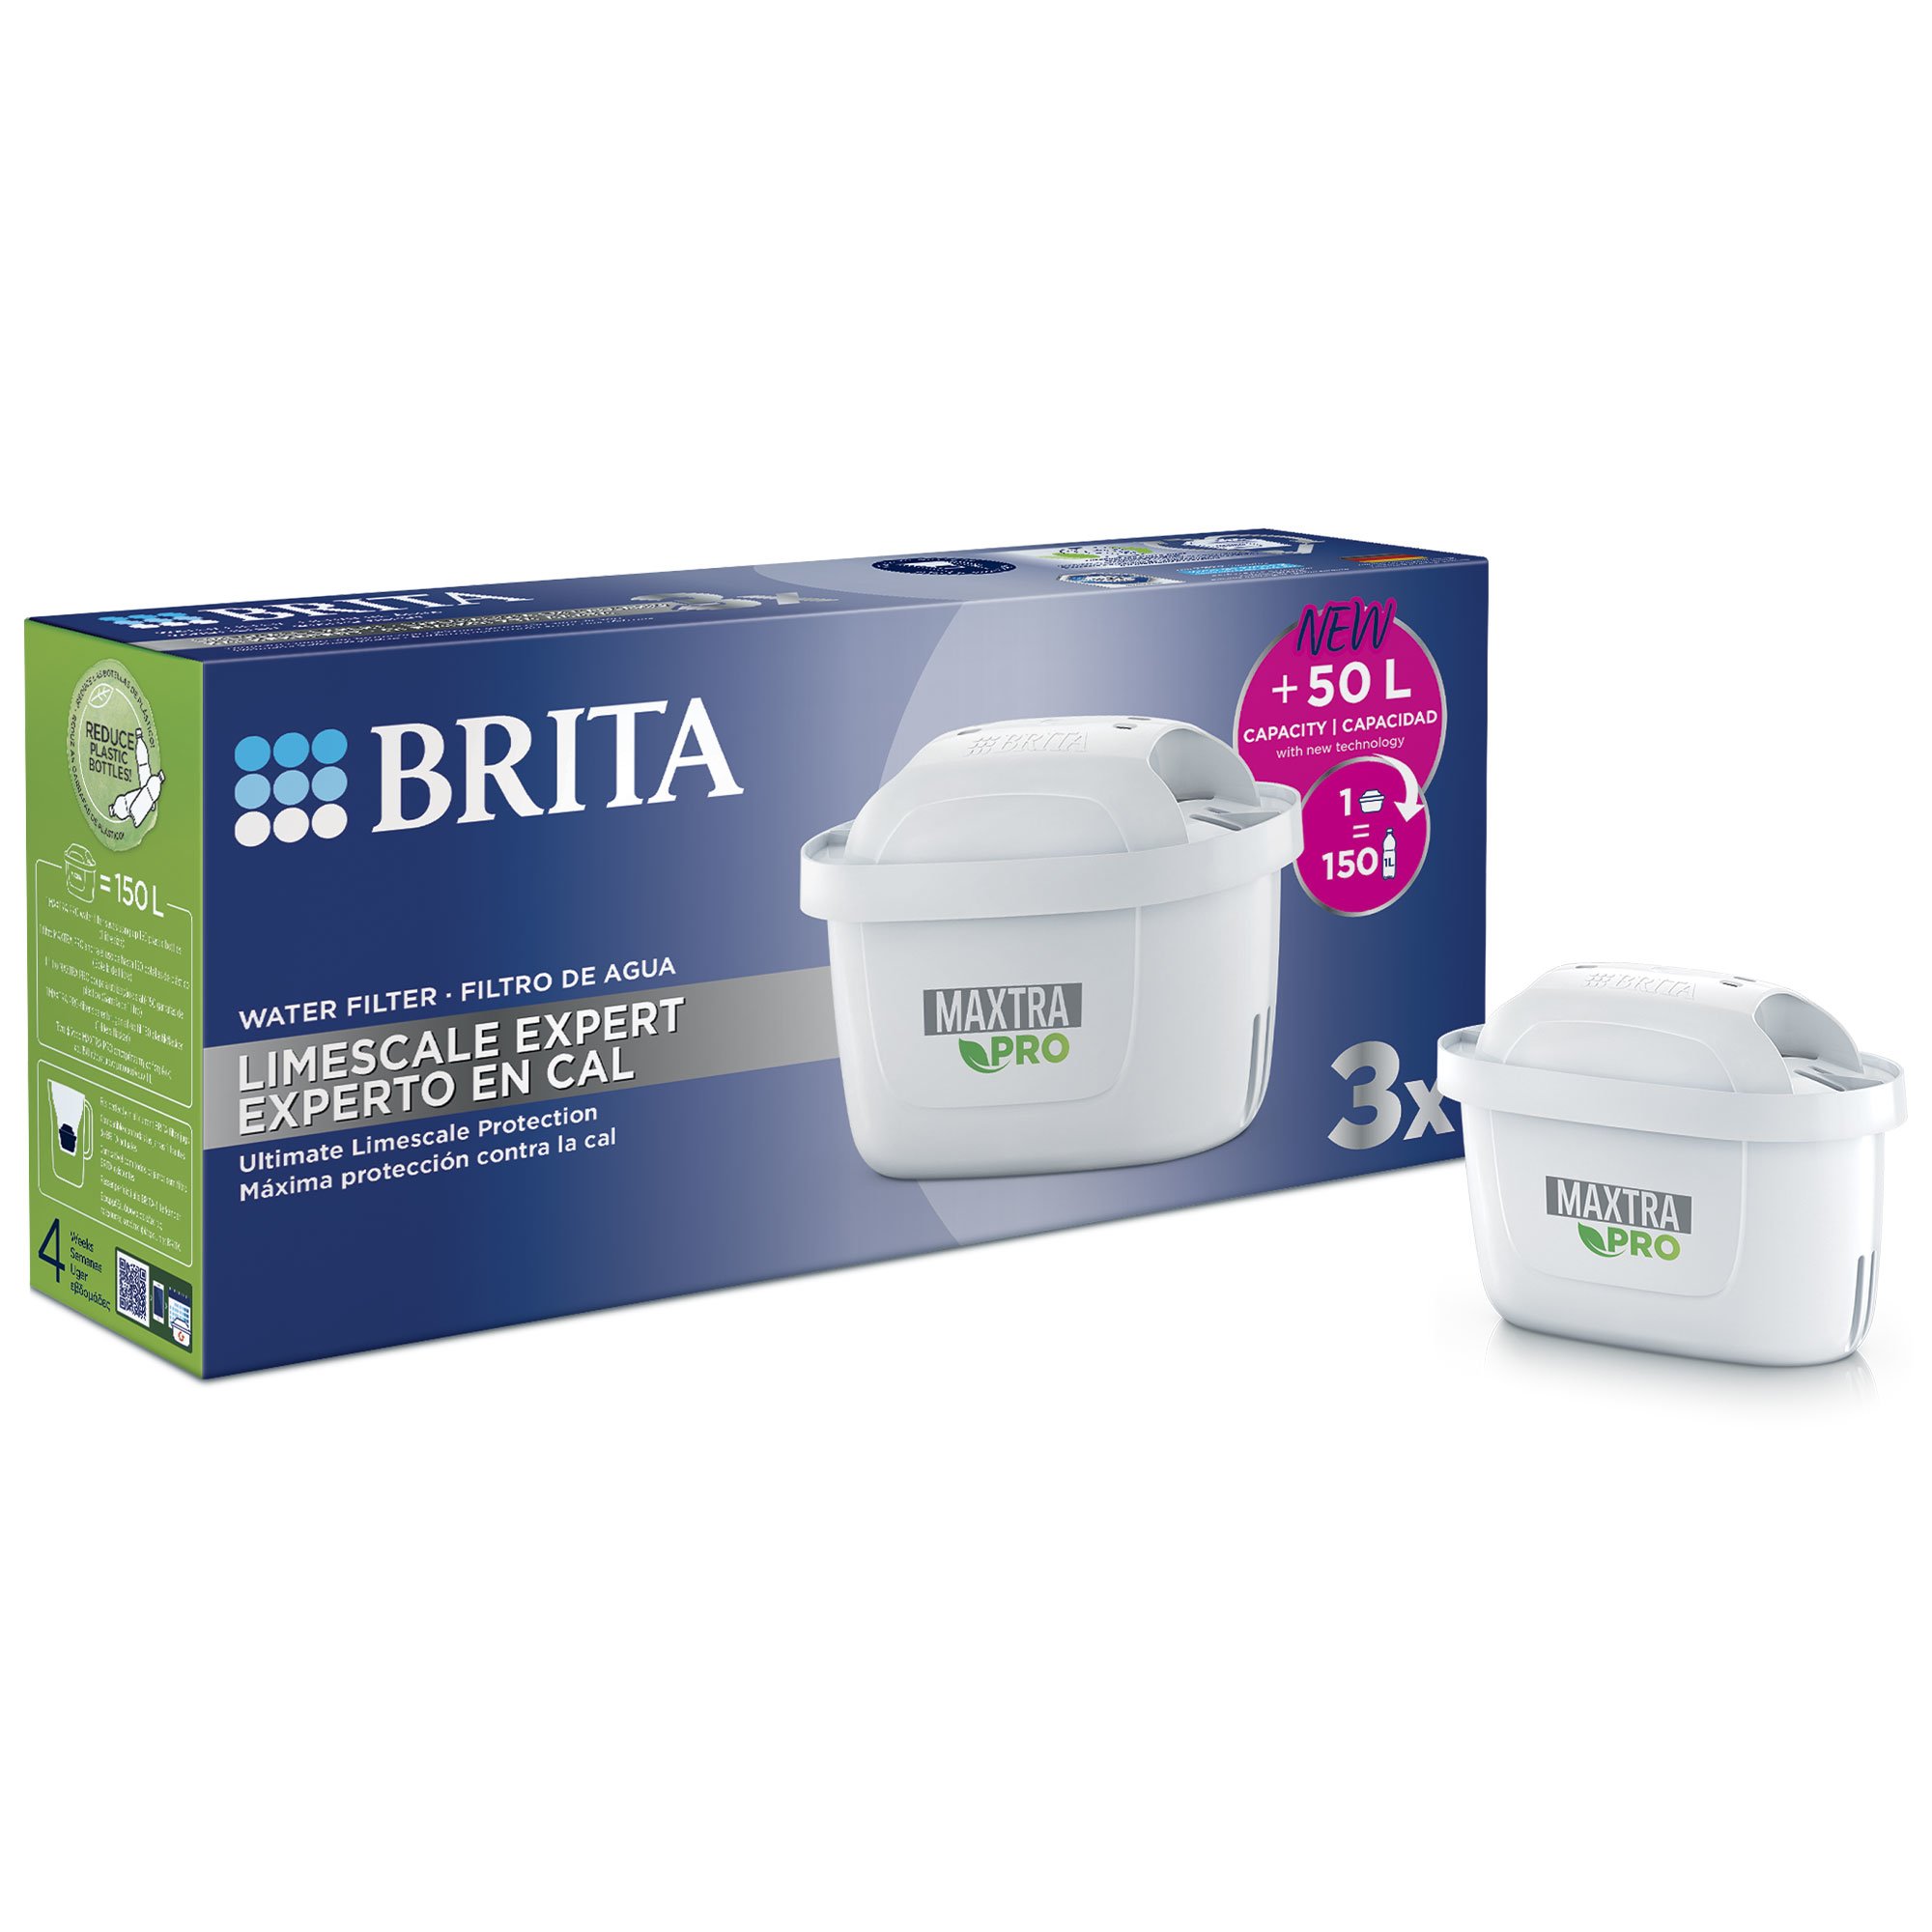 Brita MAXTRA PRO LIMESCALE EXPERT filter 3-pack